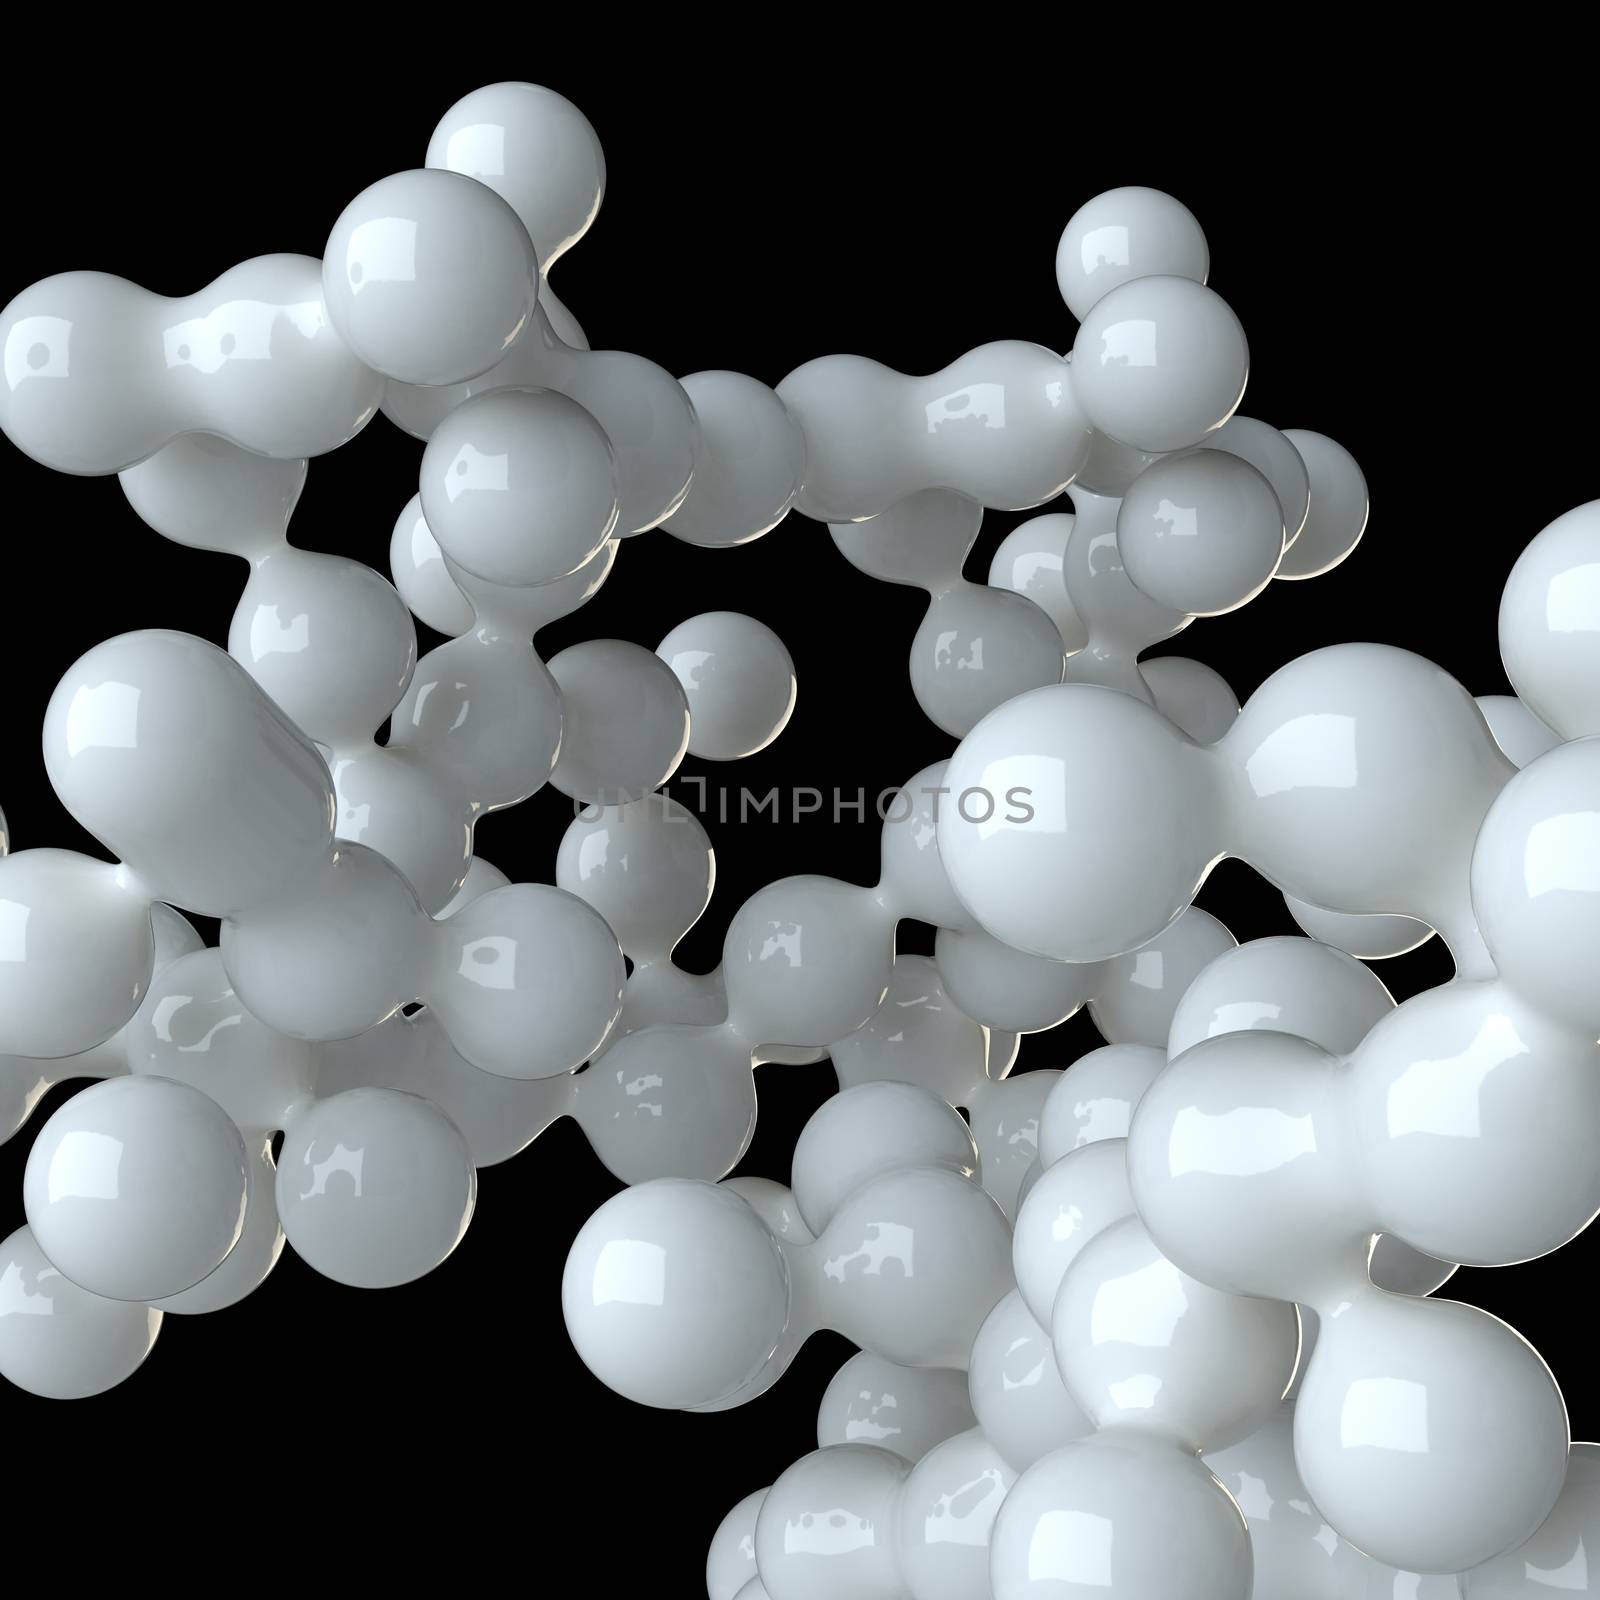 Set of realistic spheres on black background. 3D illustration